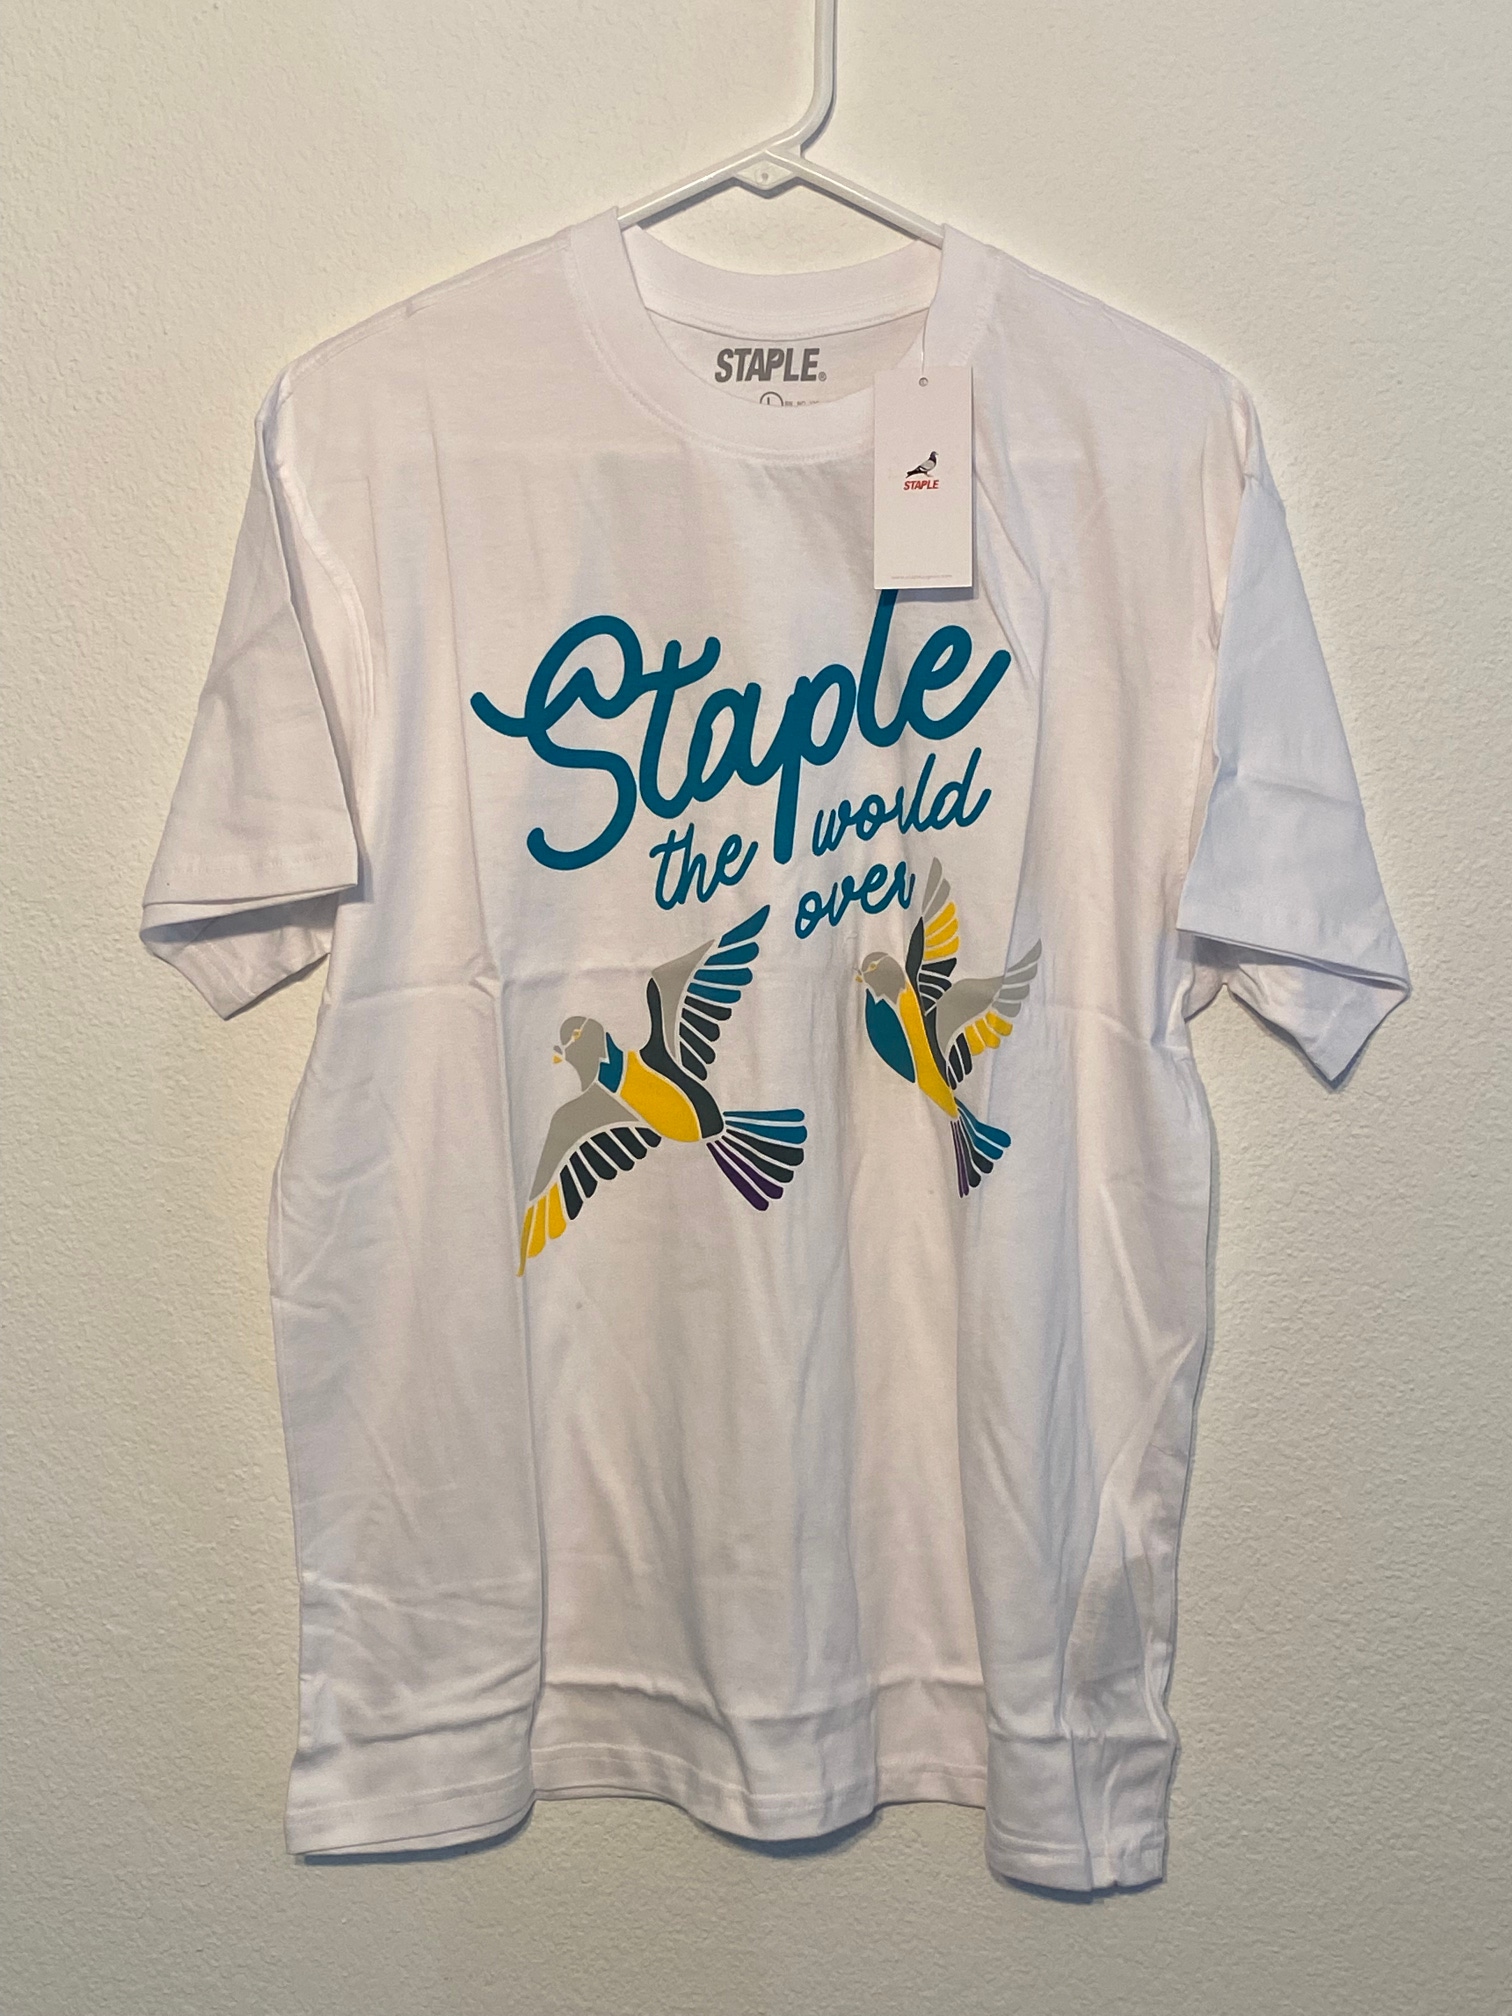 Staple Pigeon NYC Montauk Logo Size L White Casual Skateboarding T Shirt New